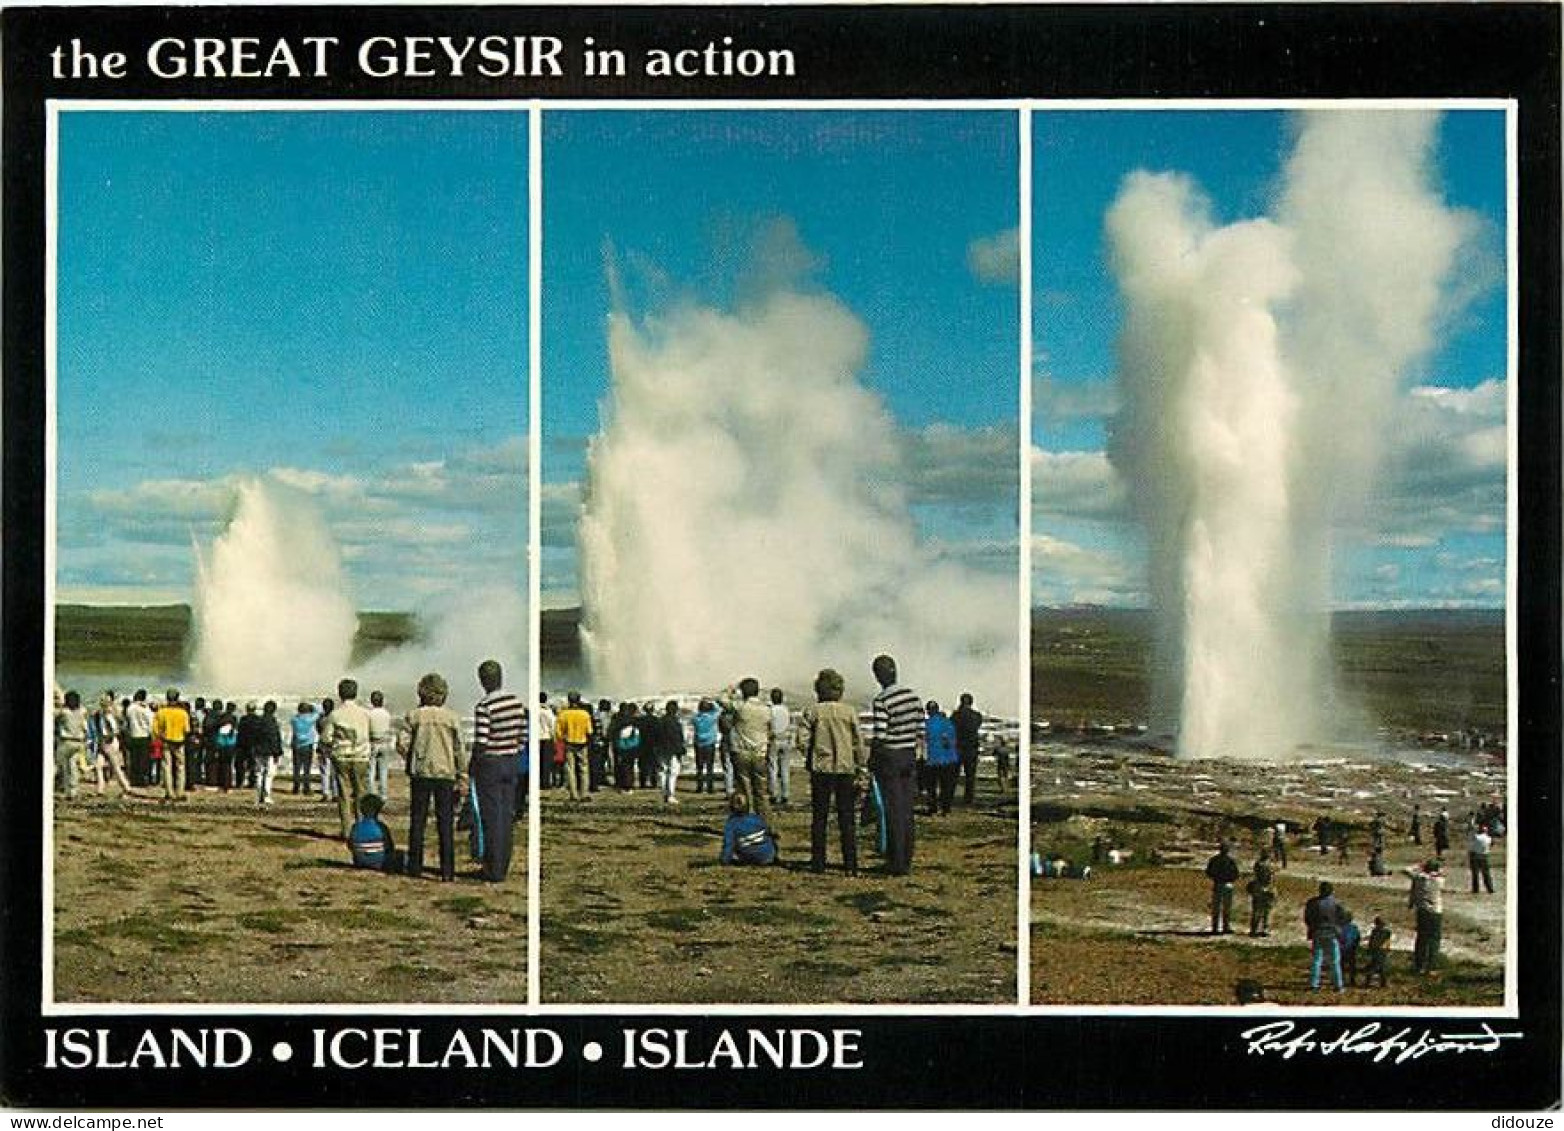 Islande - The Great Geysir In Action, Sprouting Hof Water Der And Steam 50-60 M High - Geysers - Carte Neuve - Iceland - - Islande